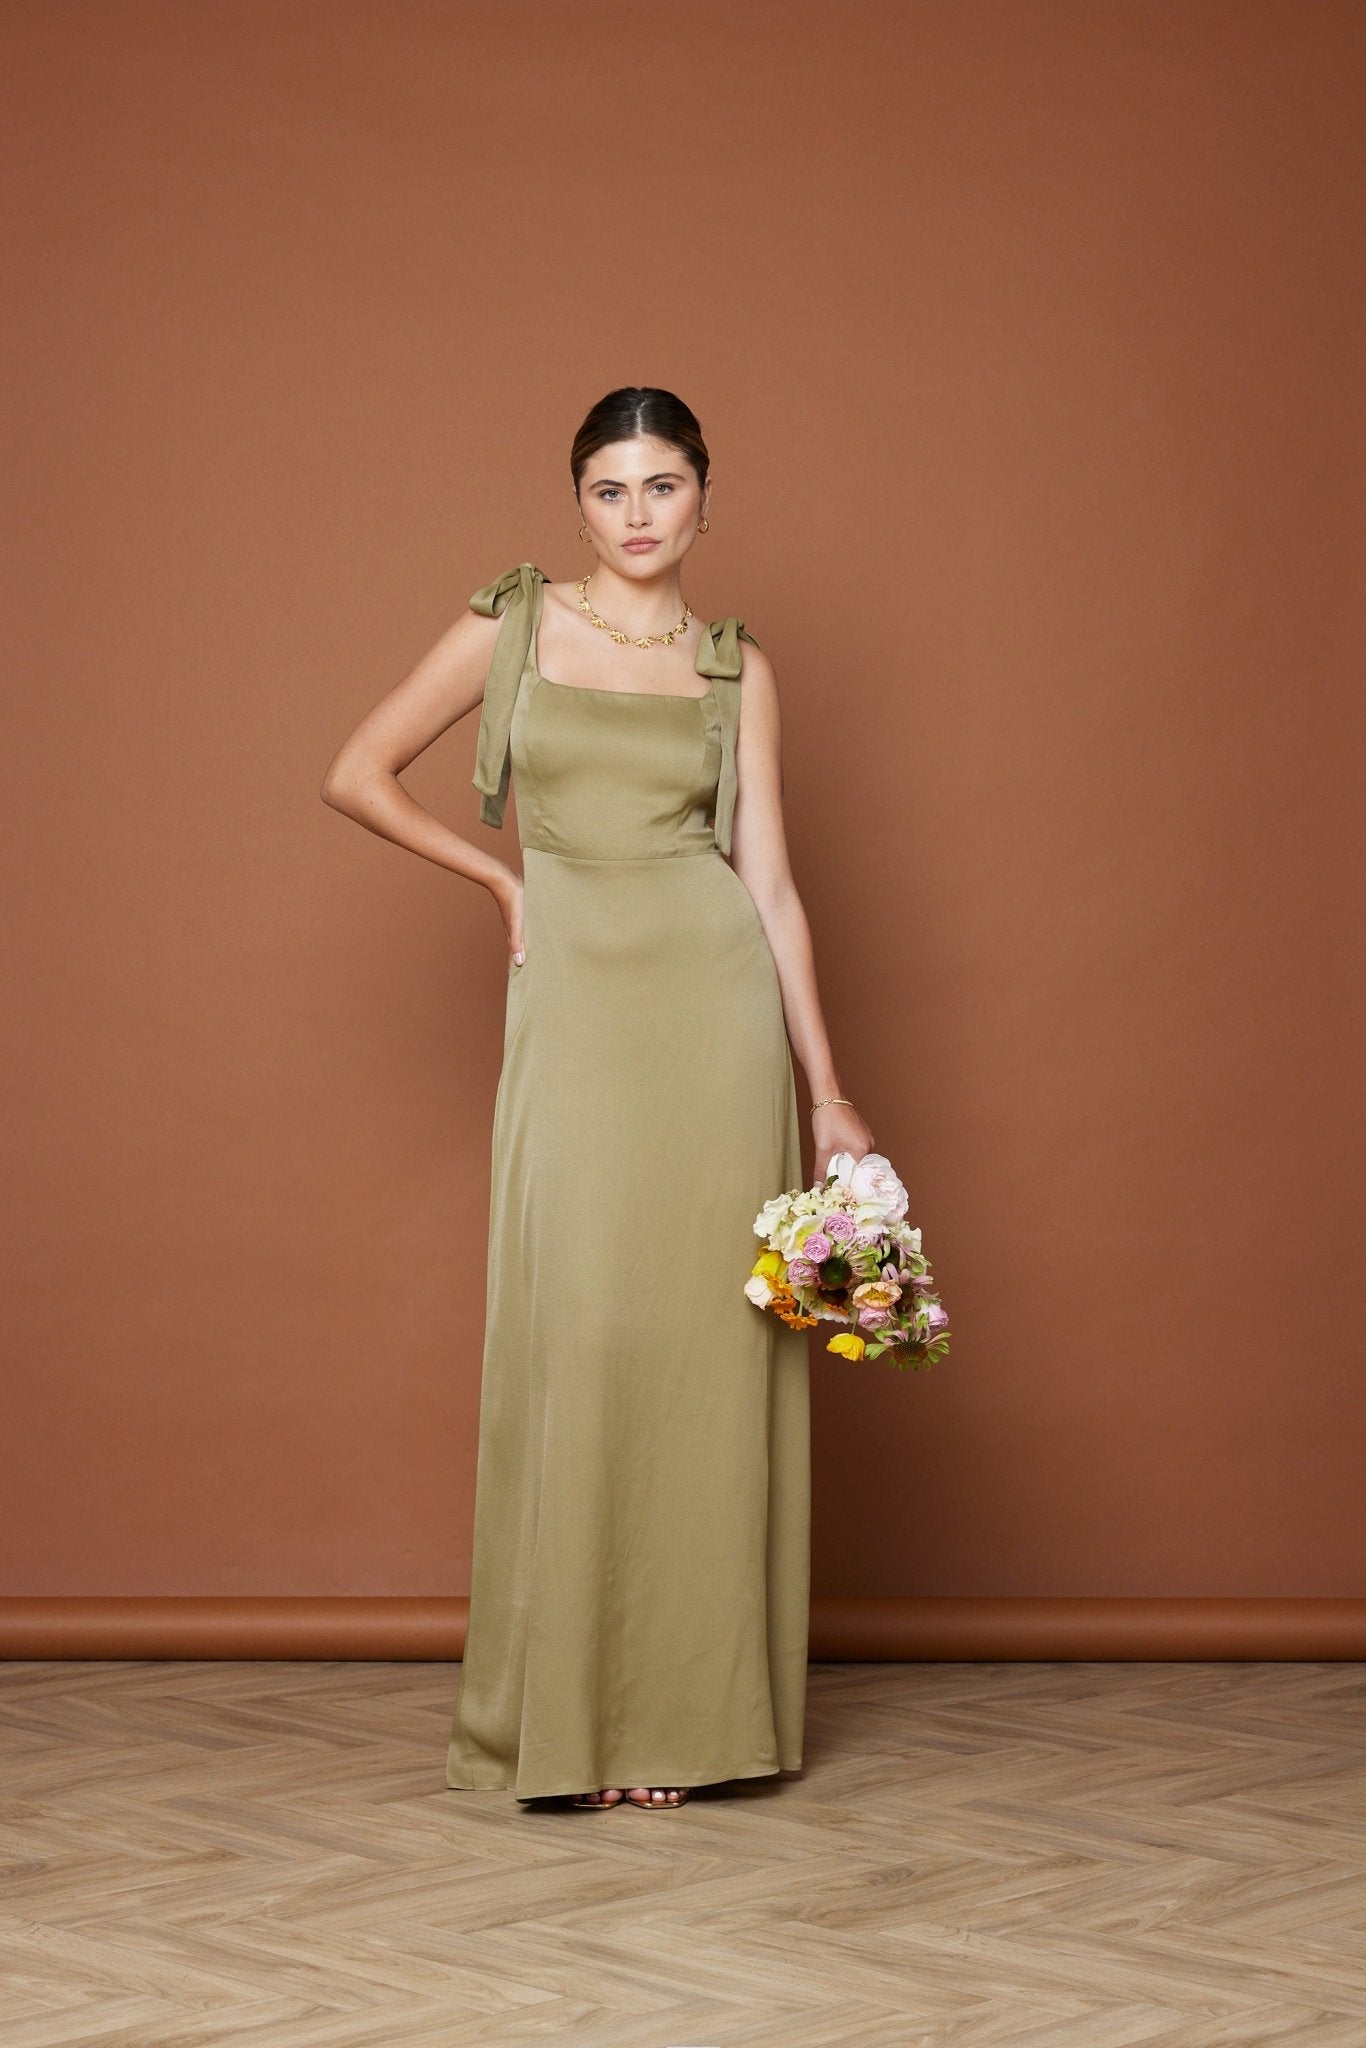 Allegra Satin Tie Shoulder Dress - Olive Green NEW - Maids to Measure